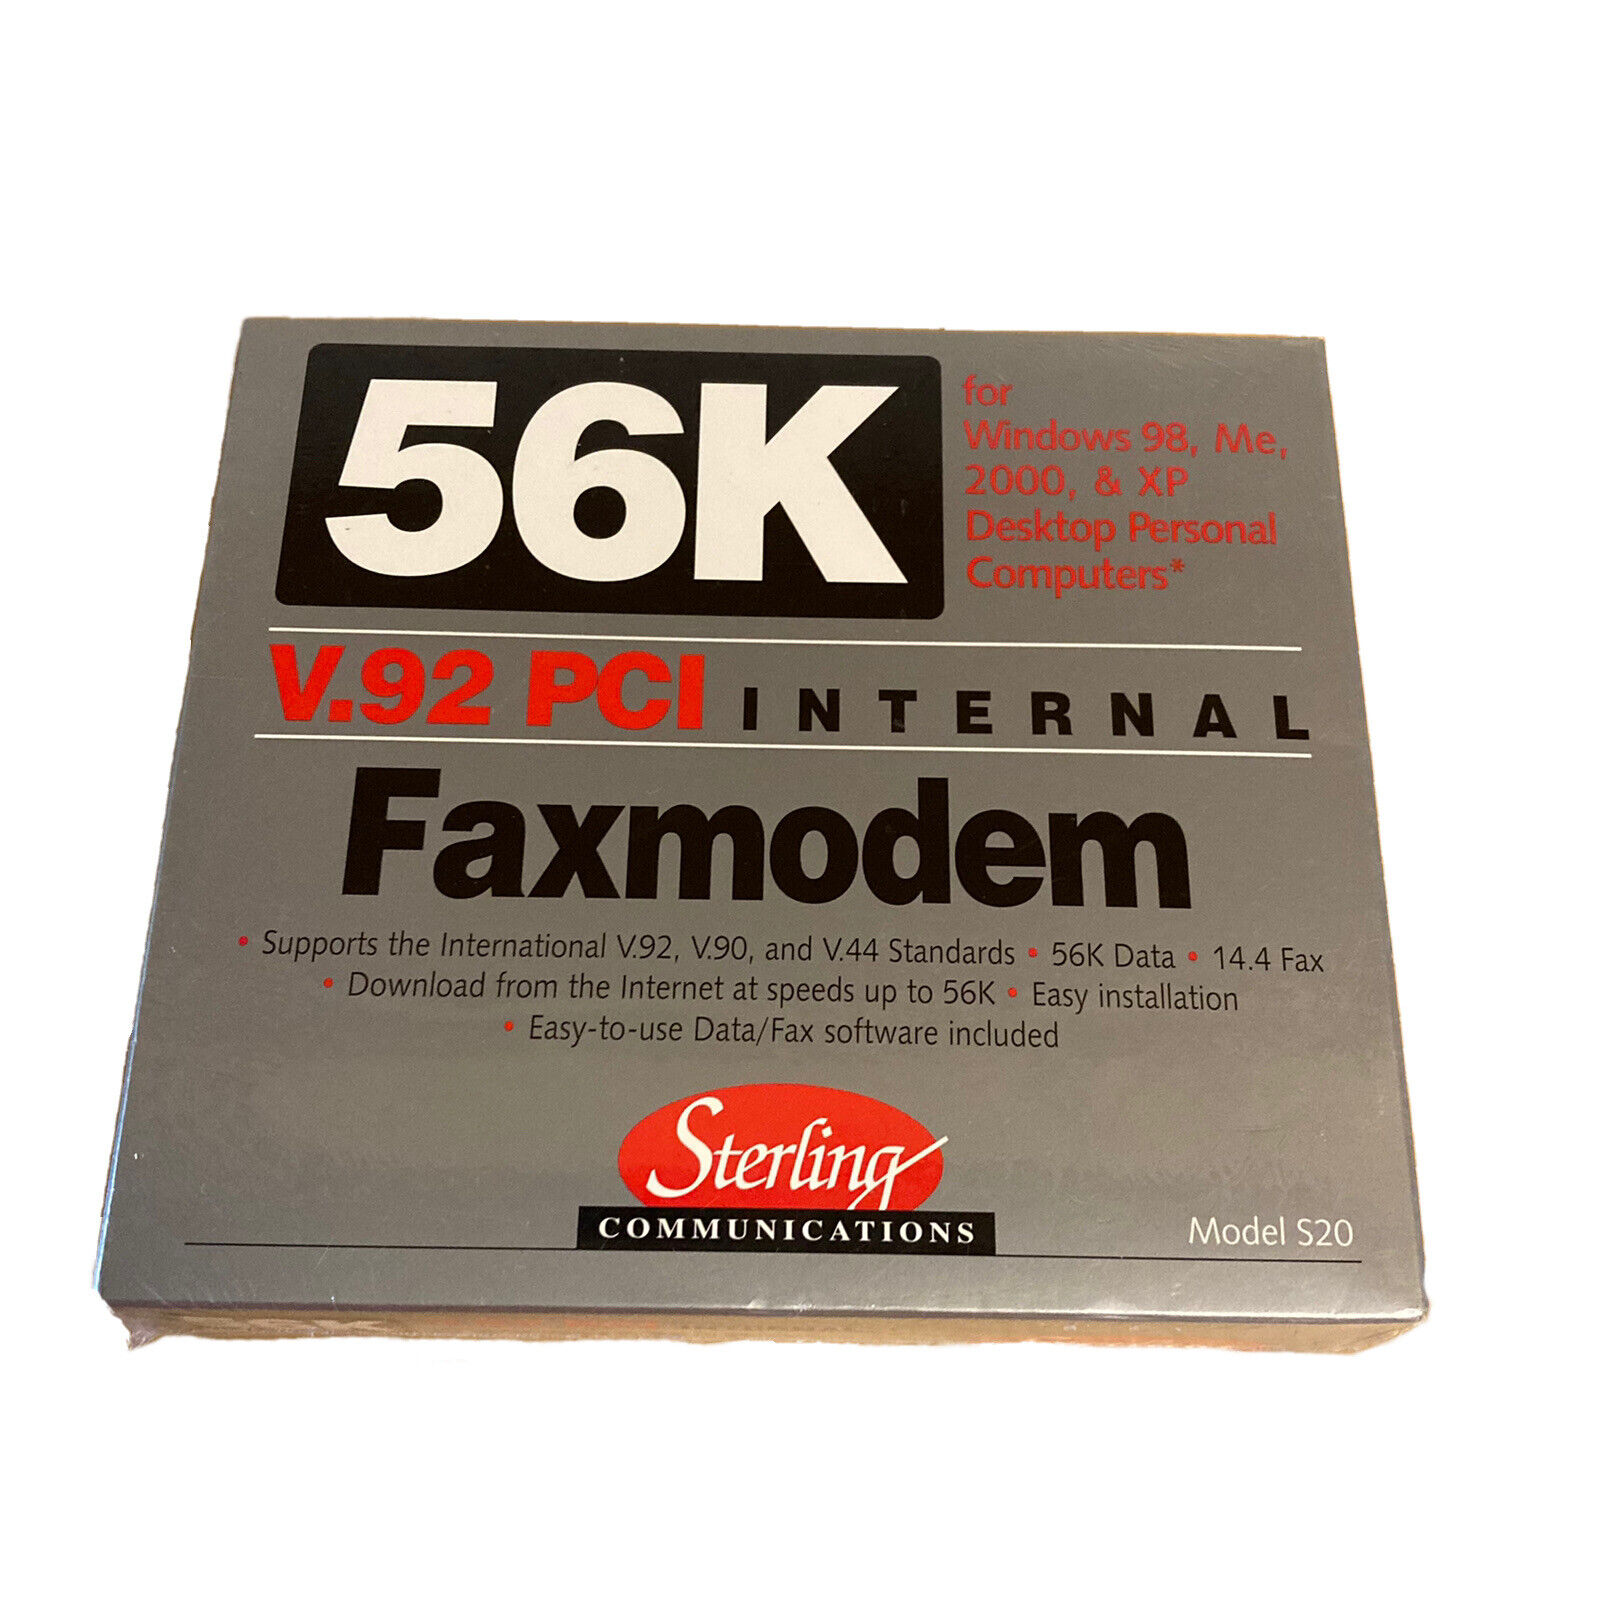 56K MODEM Internal Faxmodem V.92 PCI Sterling Communications Model S20